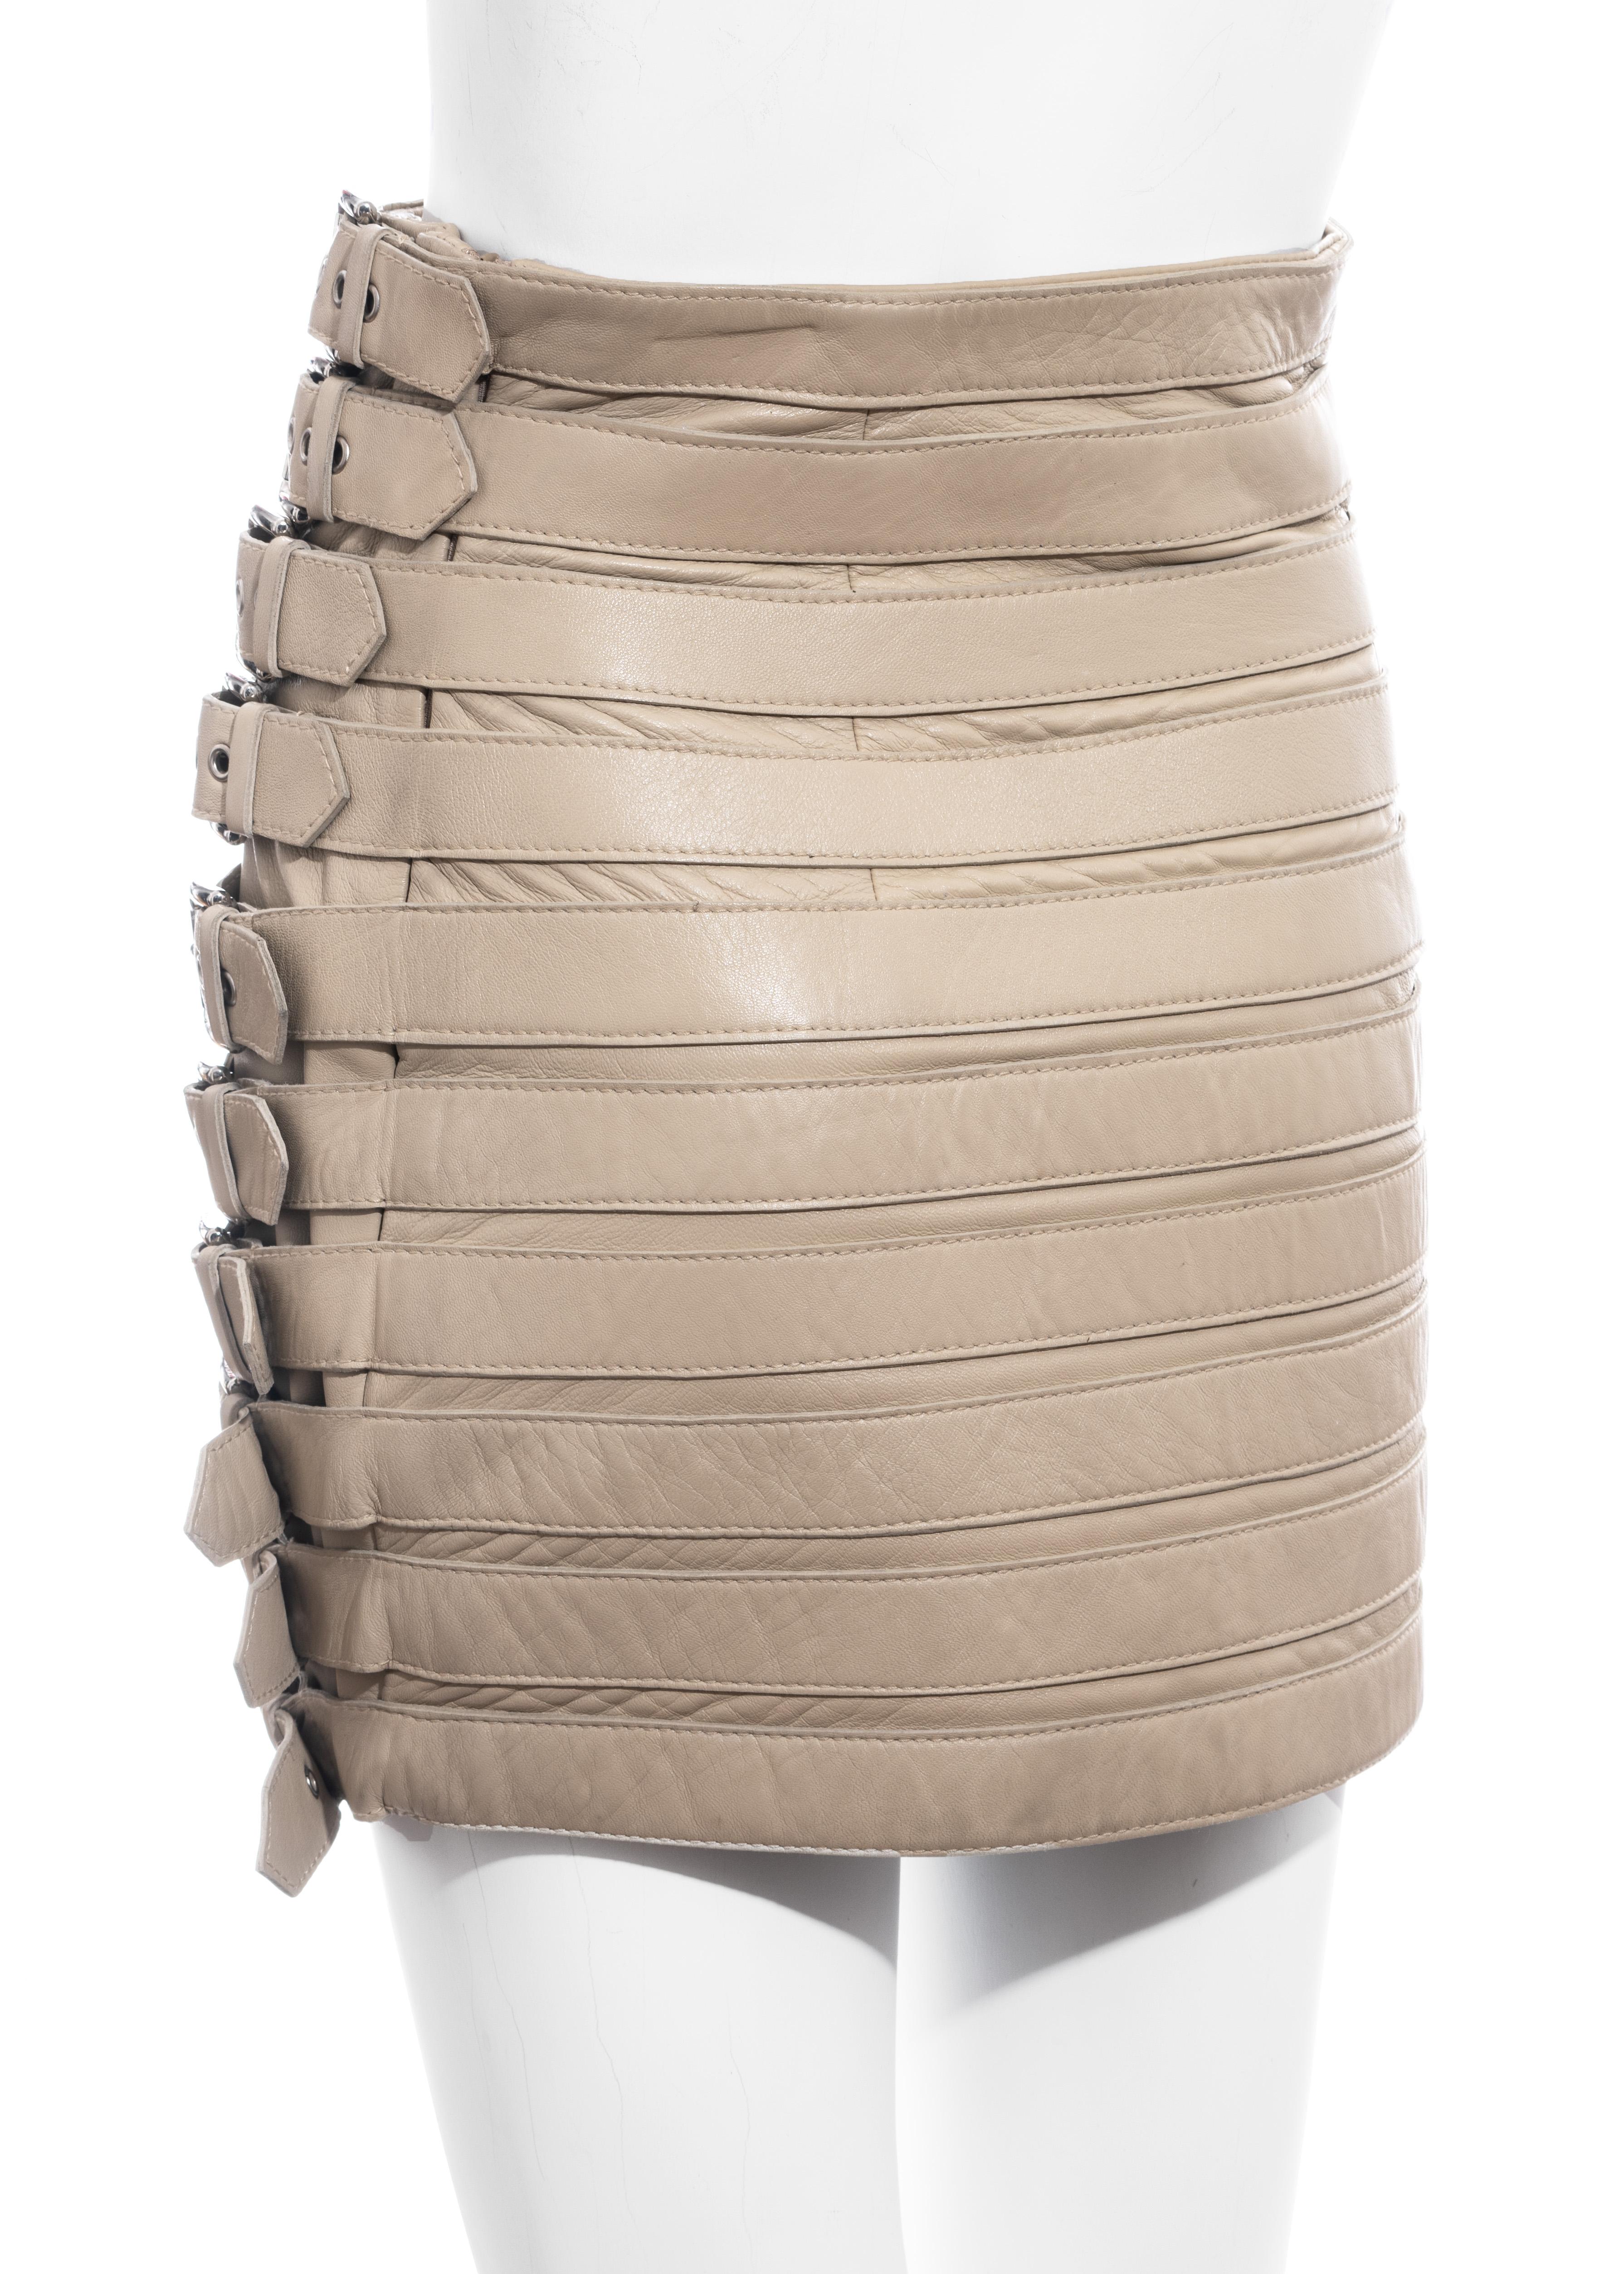 Women's Dolce & Gabbana cream lambskin leather buckled mini skirt, ss 2003